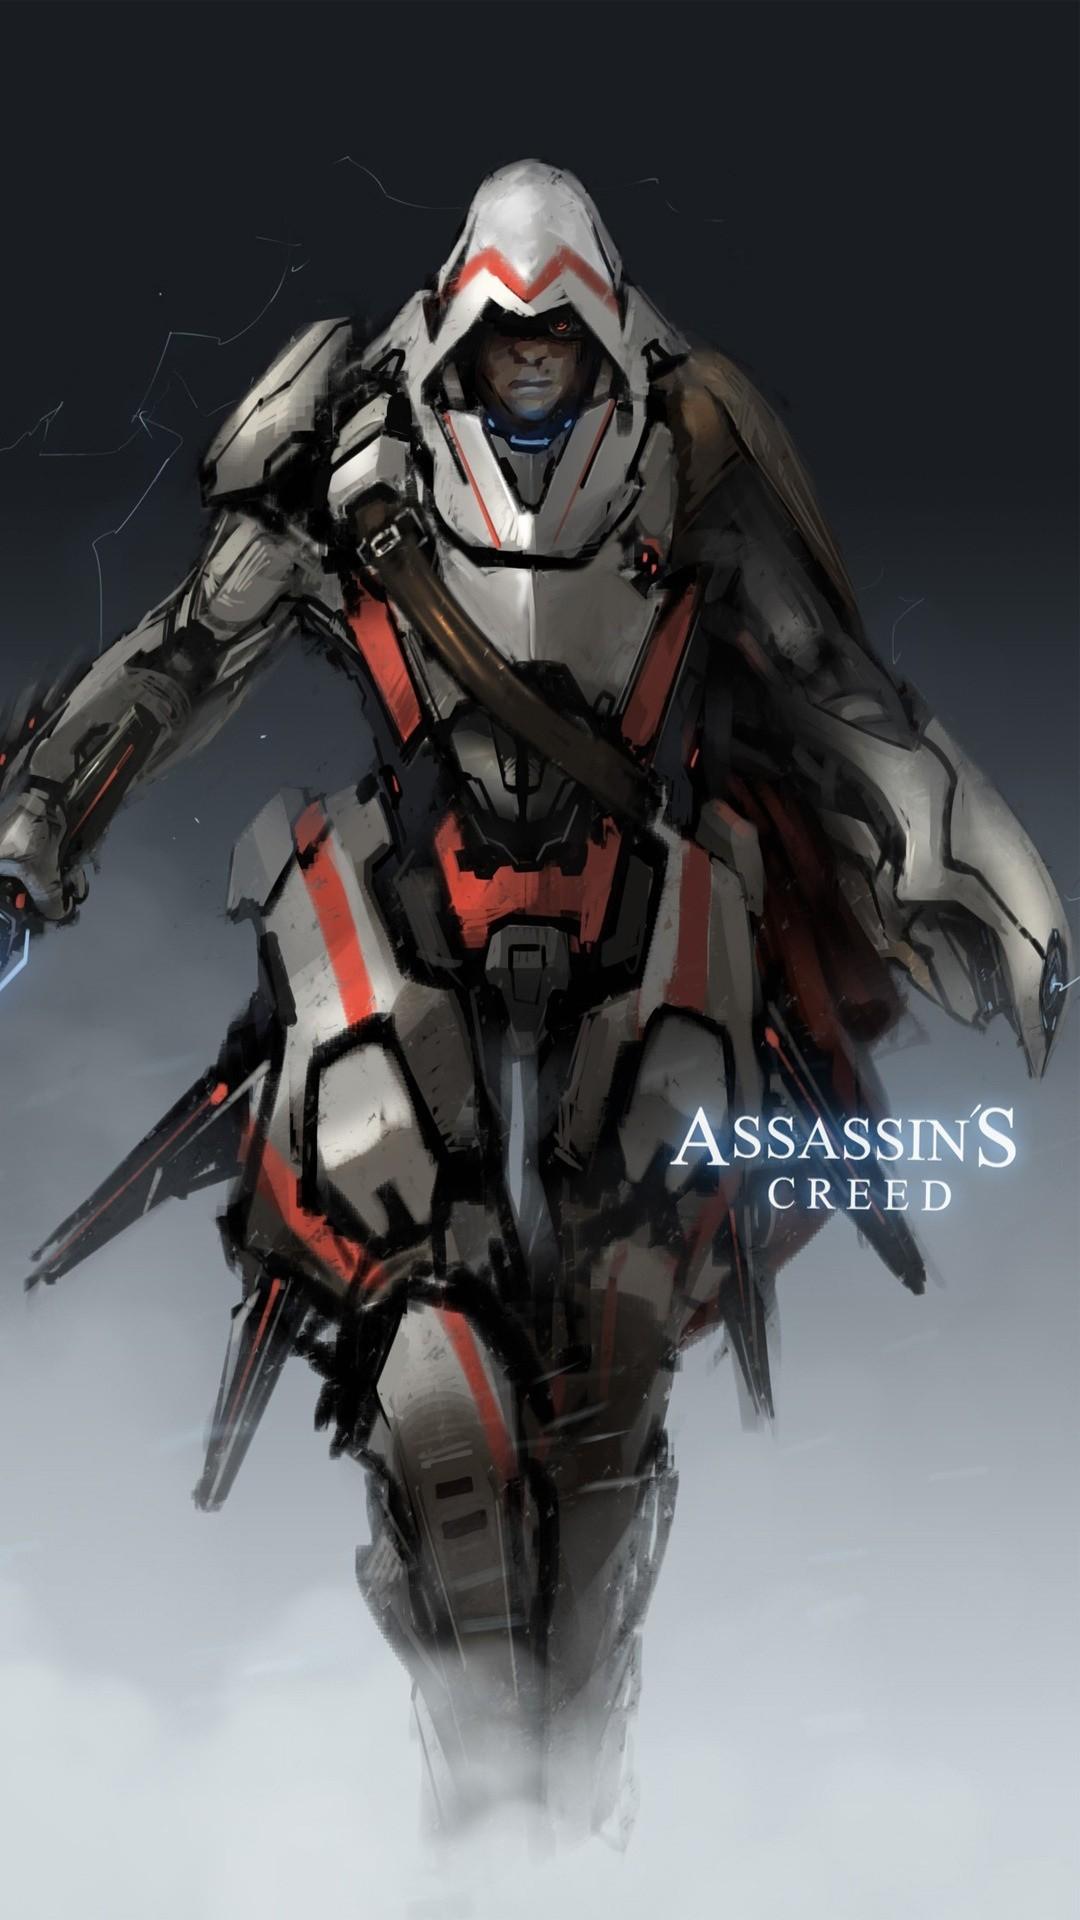 Futuristic Assassins Creed For iPhone Cool Image Amazing